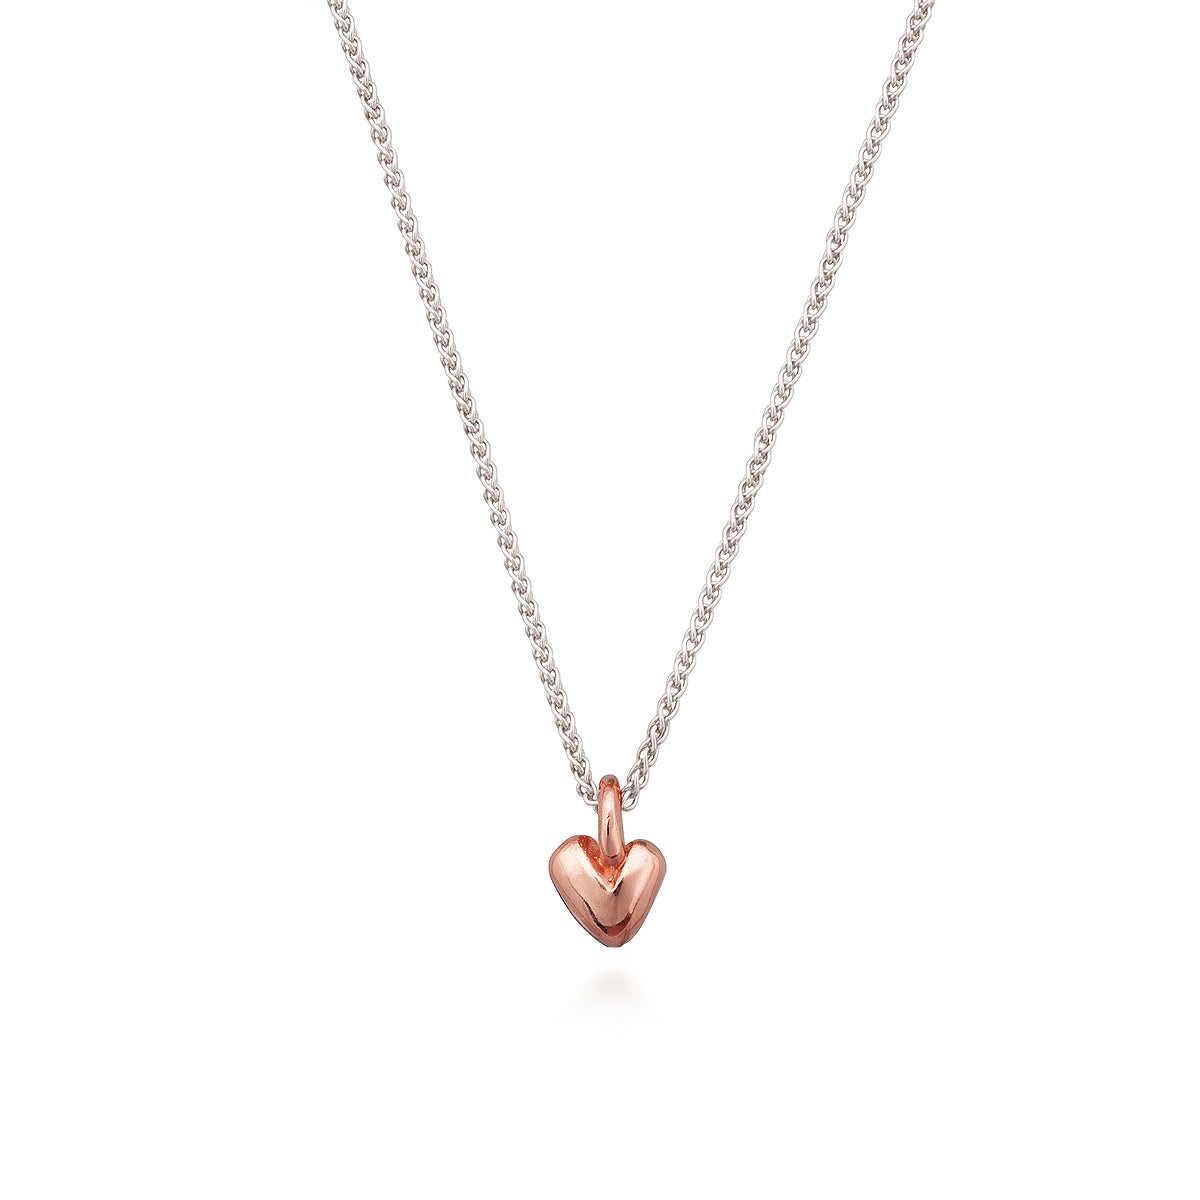 Recycled rose gold heart pendant Scarlett Jewellery UK Slow fashion jewellery trends